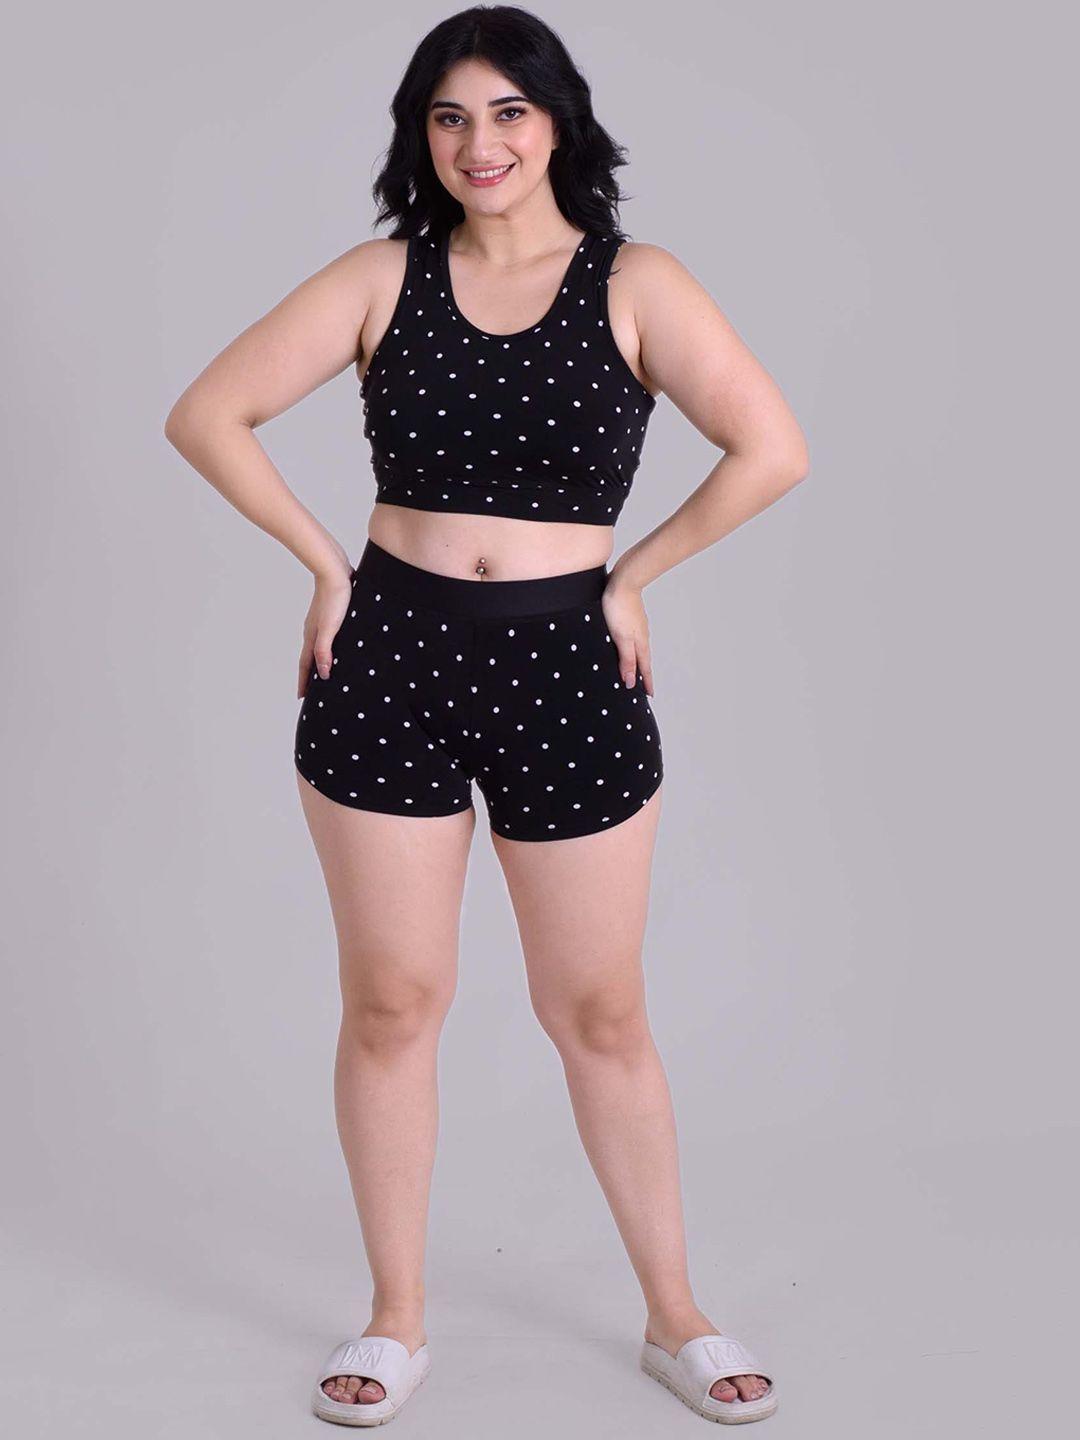 keepfit-polka-dots-printed-crop-top-with-boy-shorts-swimset